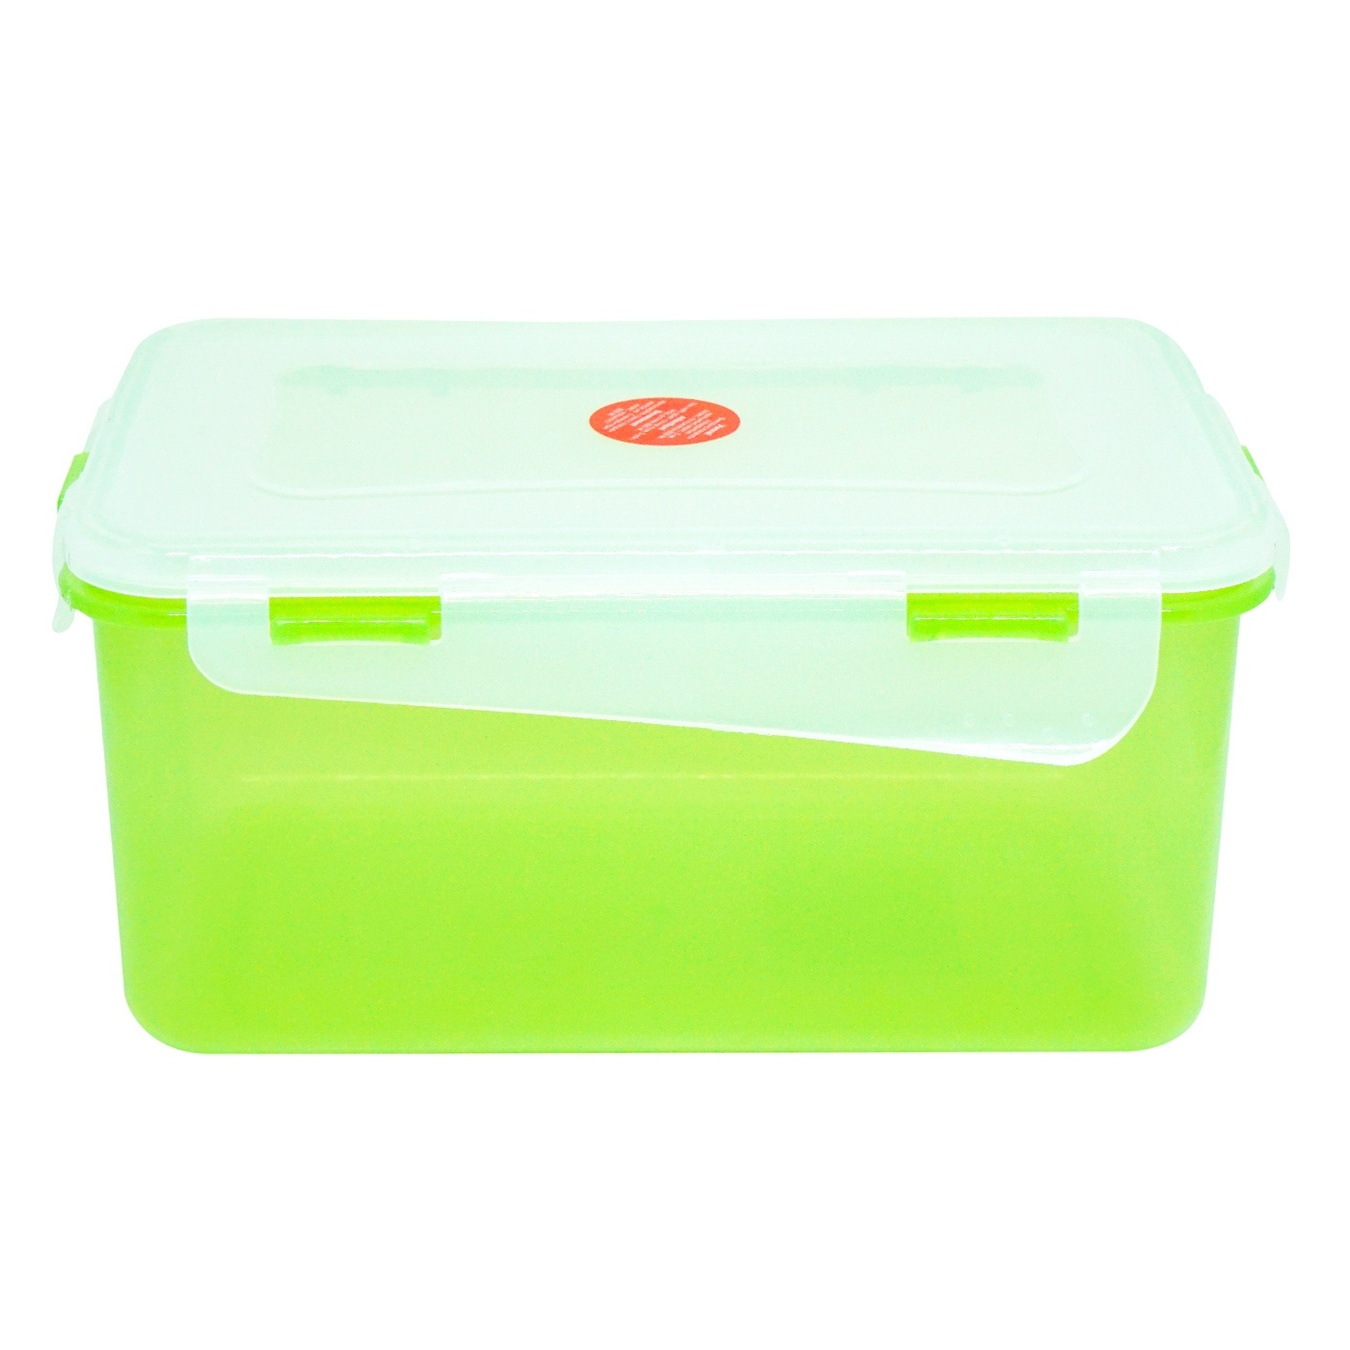 Universal container Fiesta Aleana rectangular green/transparent 1.5 l